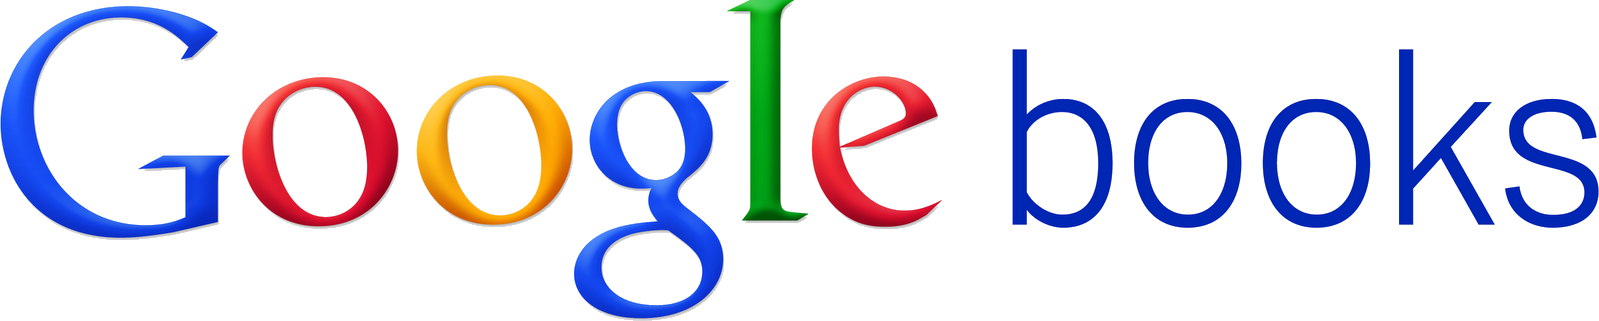 Image book beta logo. Google search png